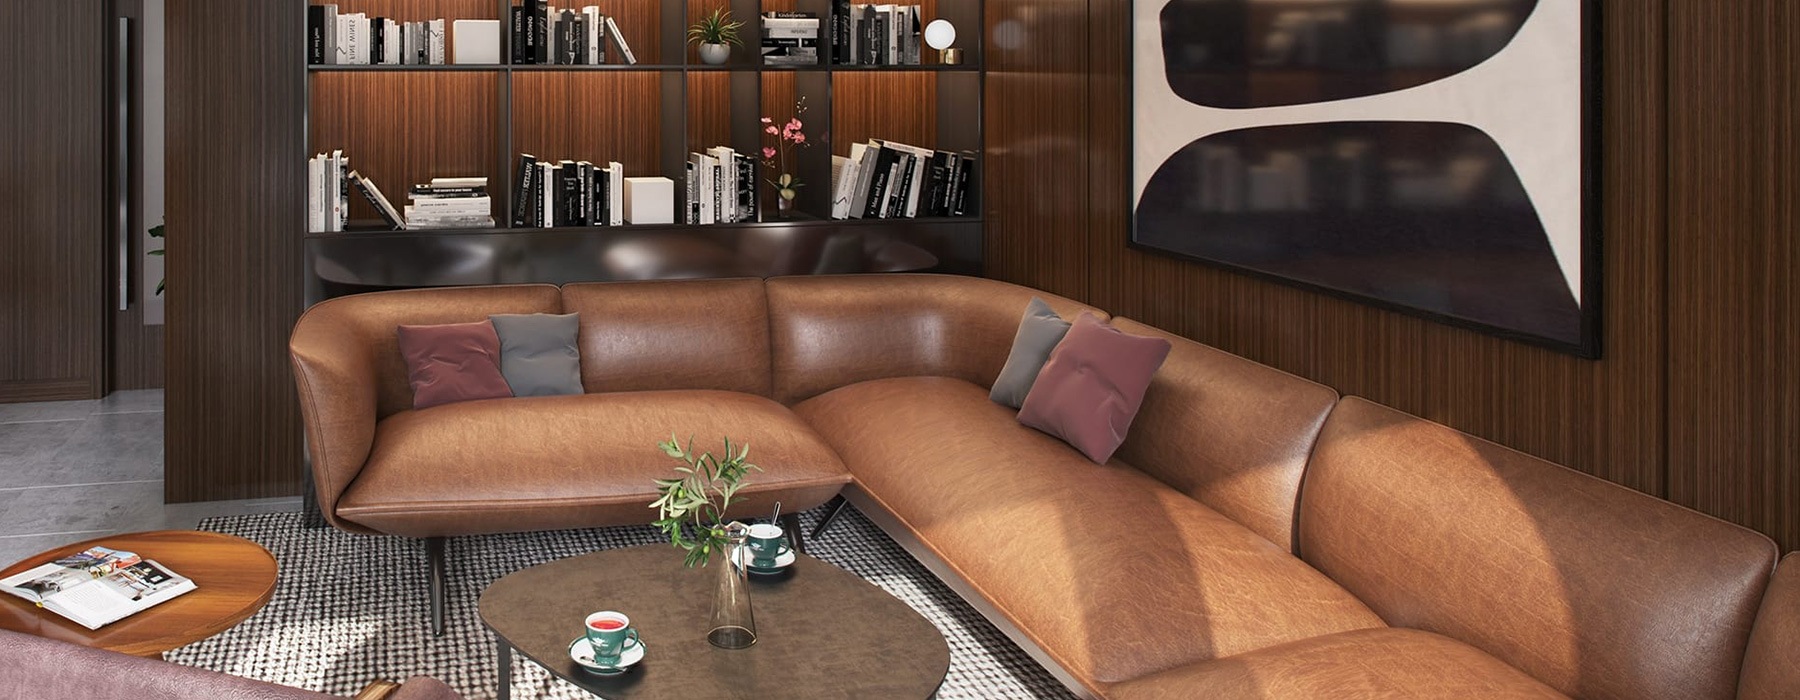 modern amenities & lounge spaces